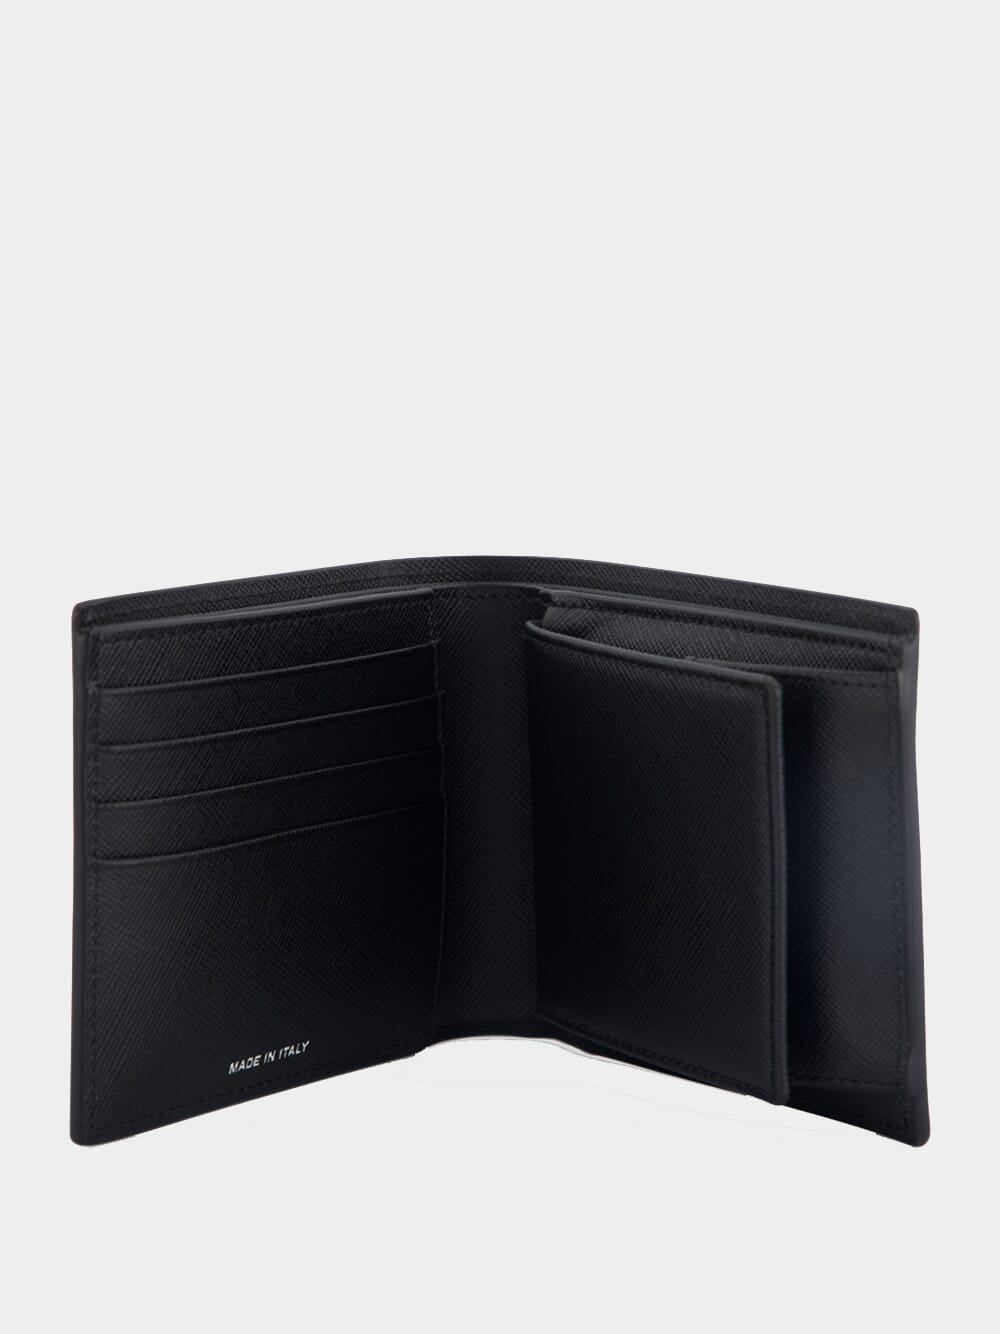 Saffiano Leather Bi-Fold Wallet